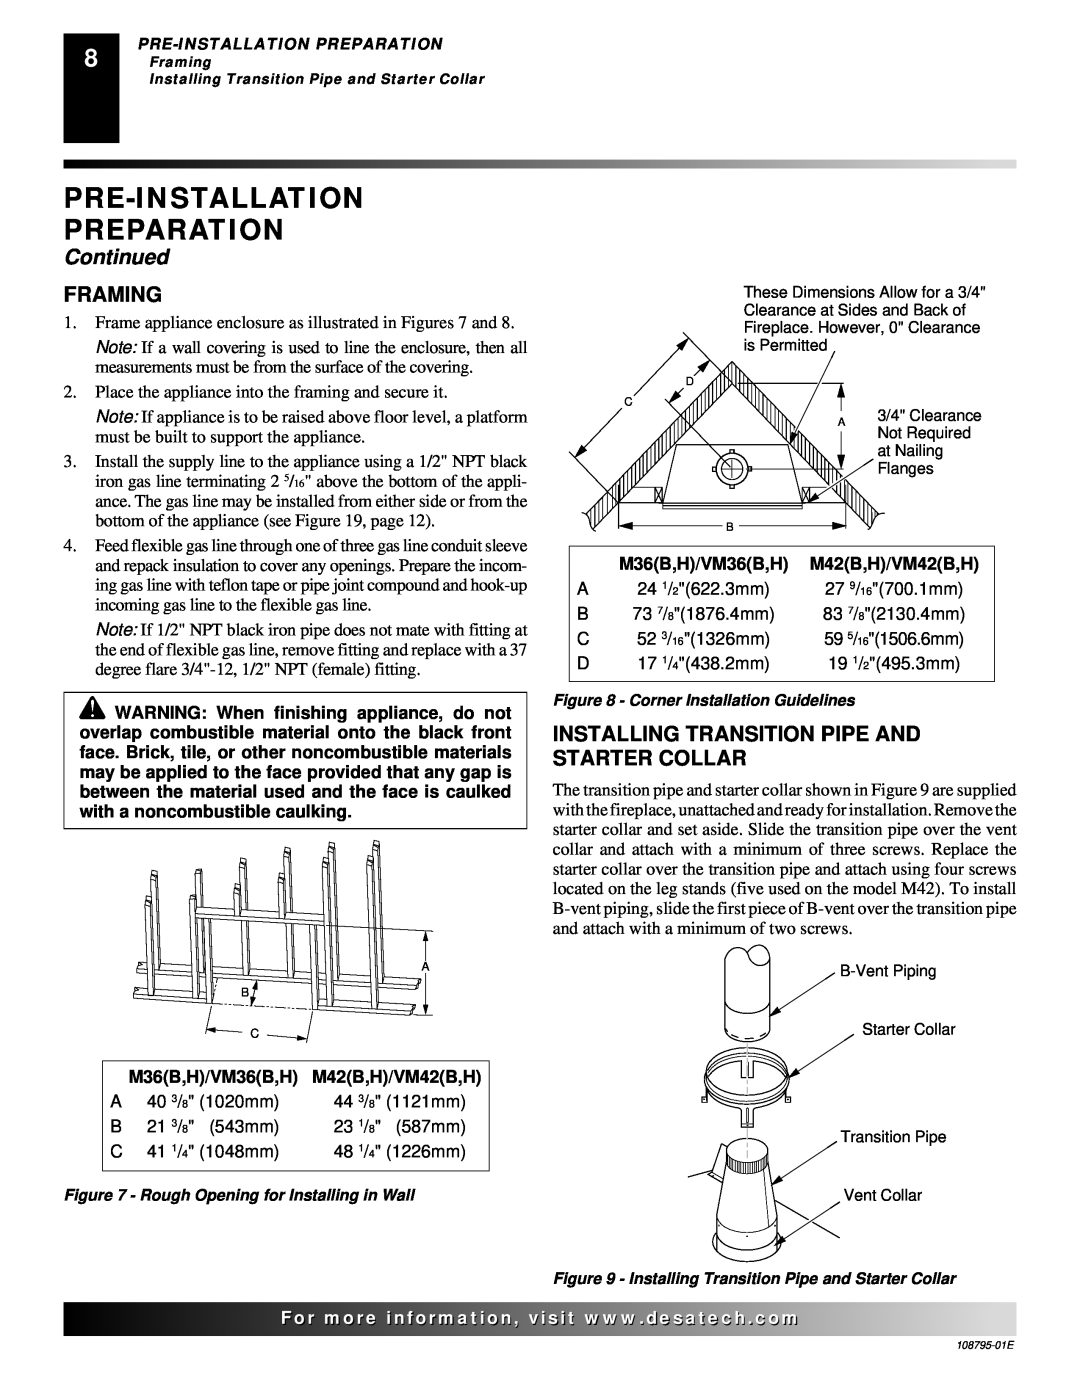 Desa installation manual Pre-Installation Preparation, Continued, M36B,H/VM36B,H, M42B,H/VM42B,H 